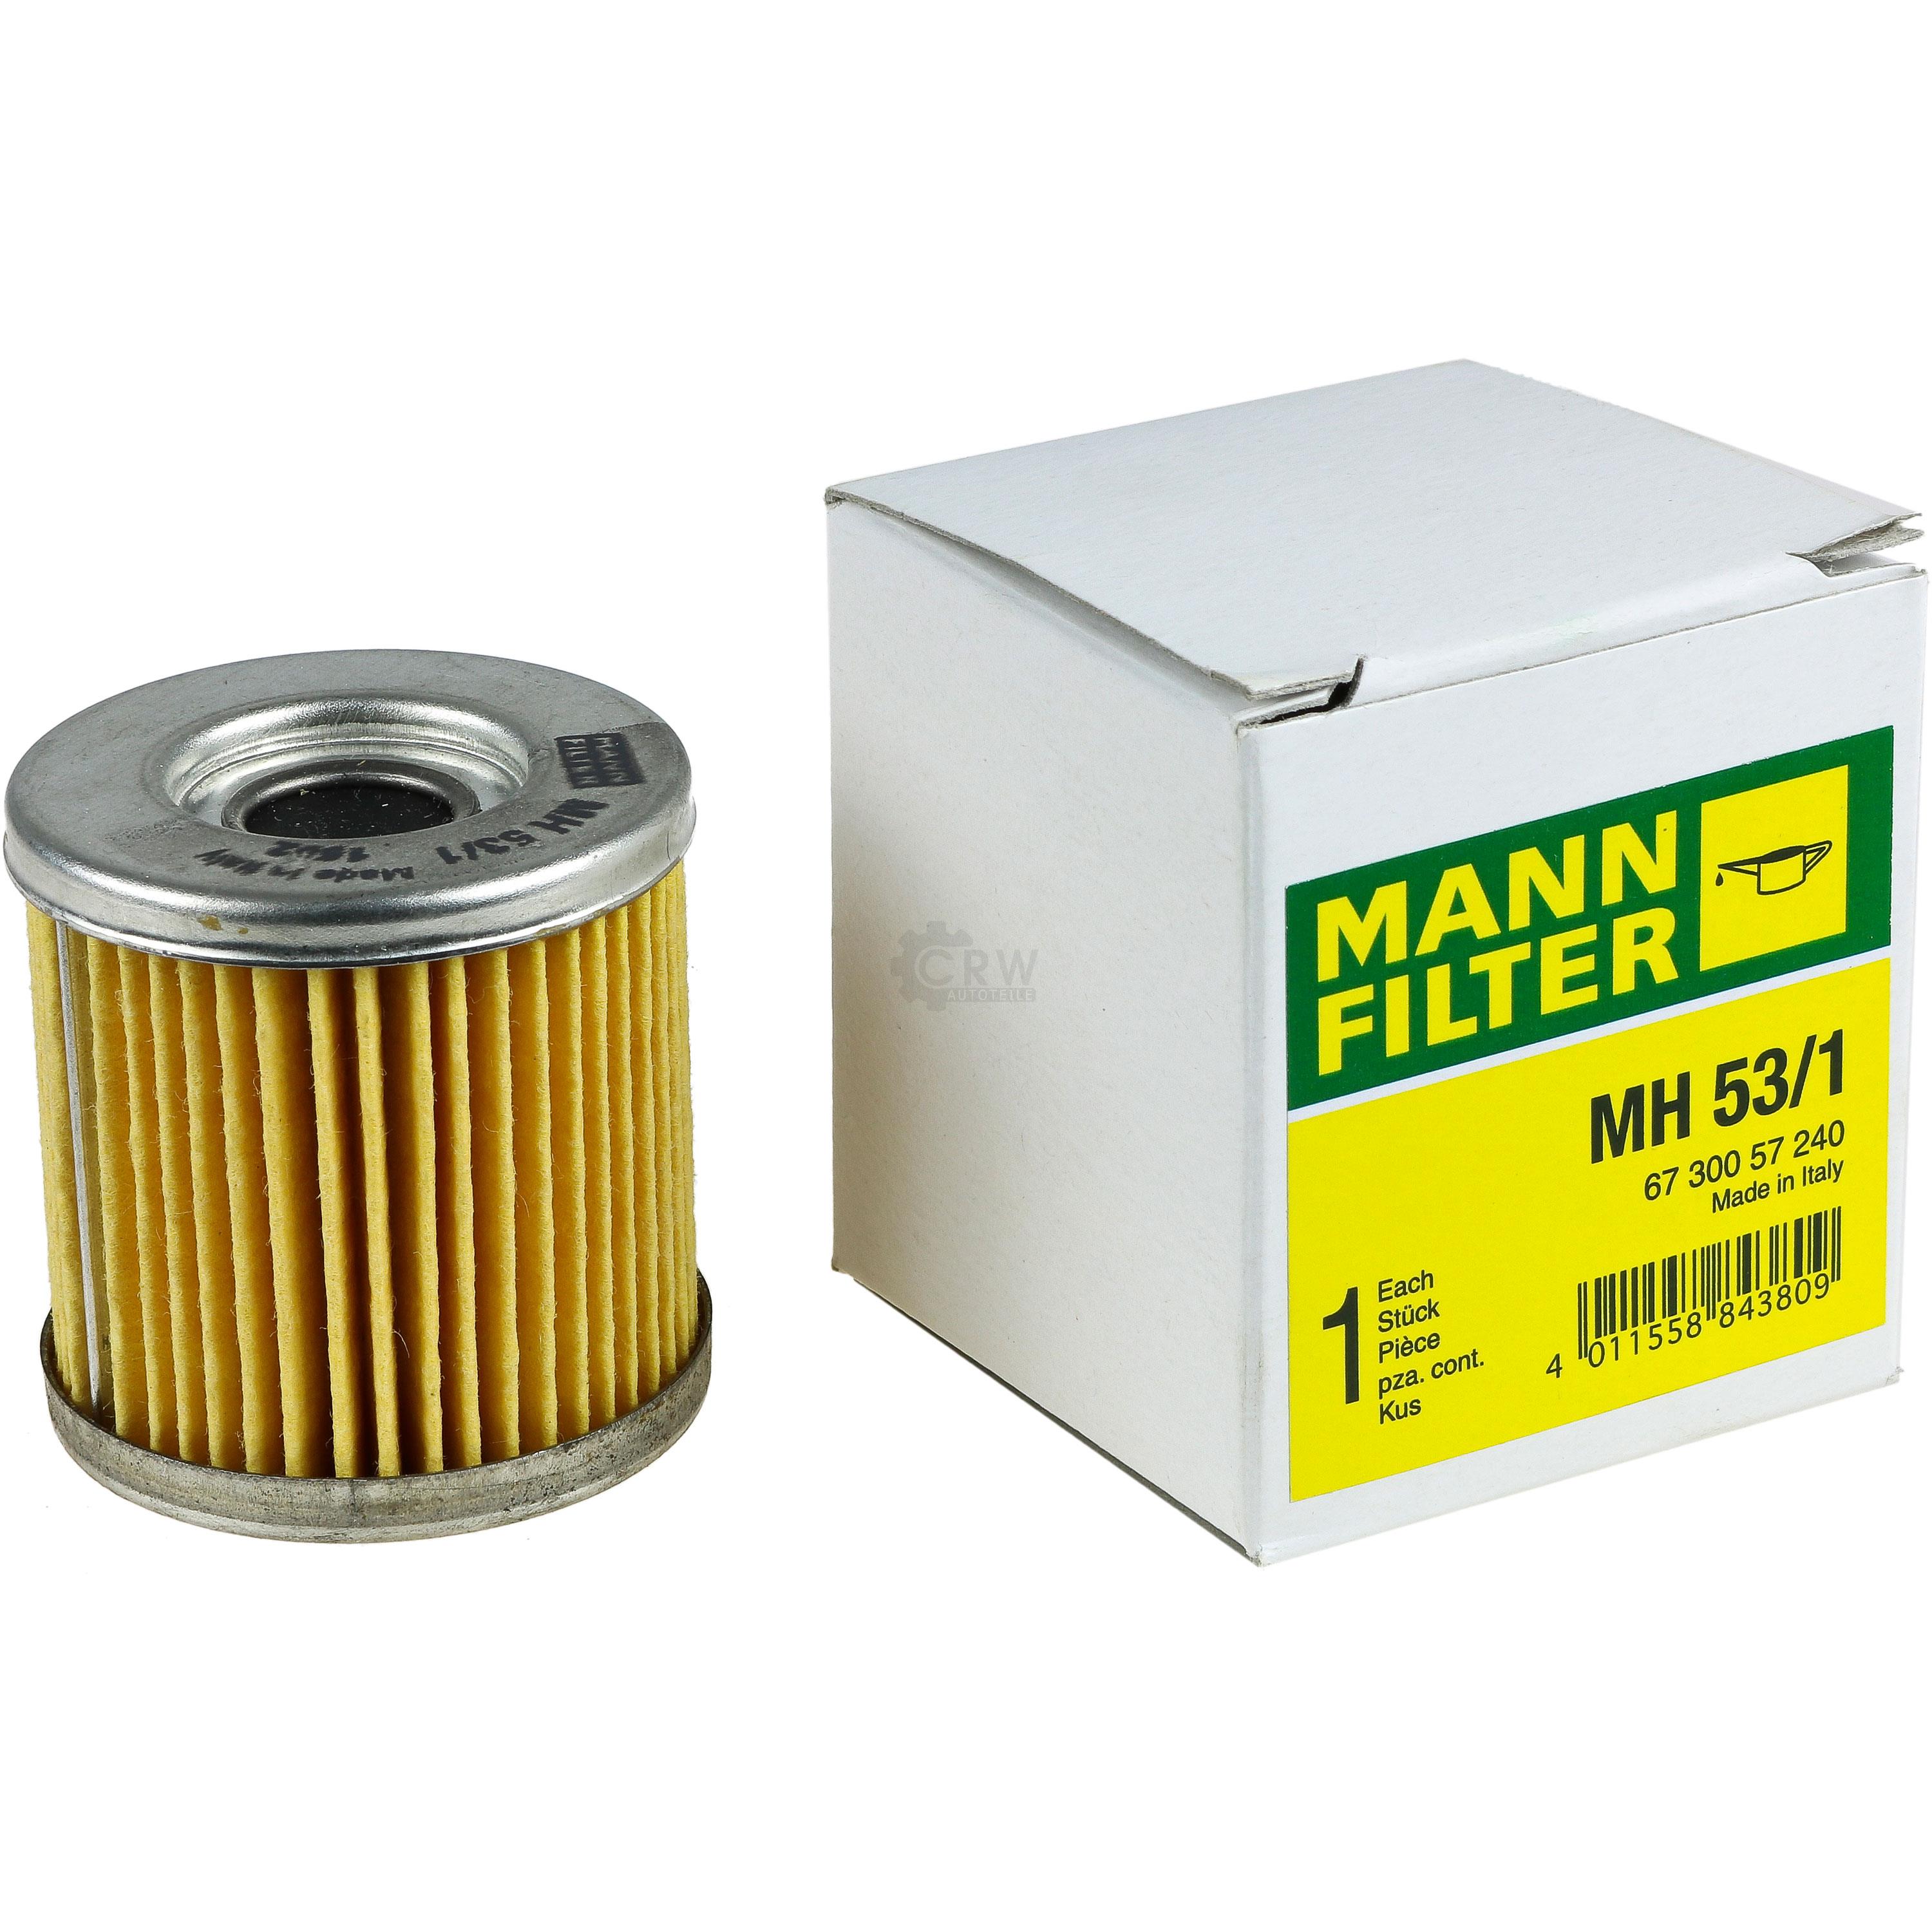 MANN-FILTER Ölfilter MH 53/1 Oil Filter